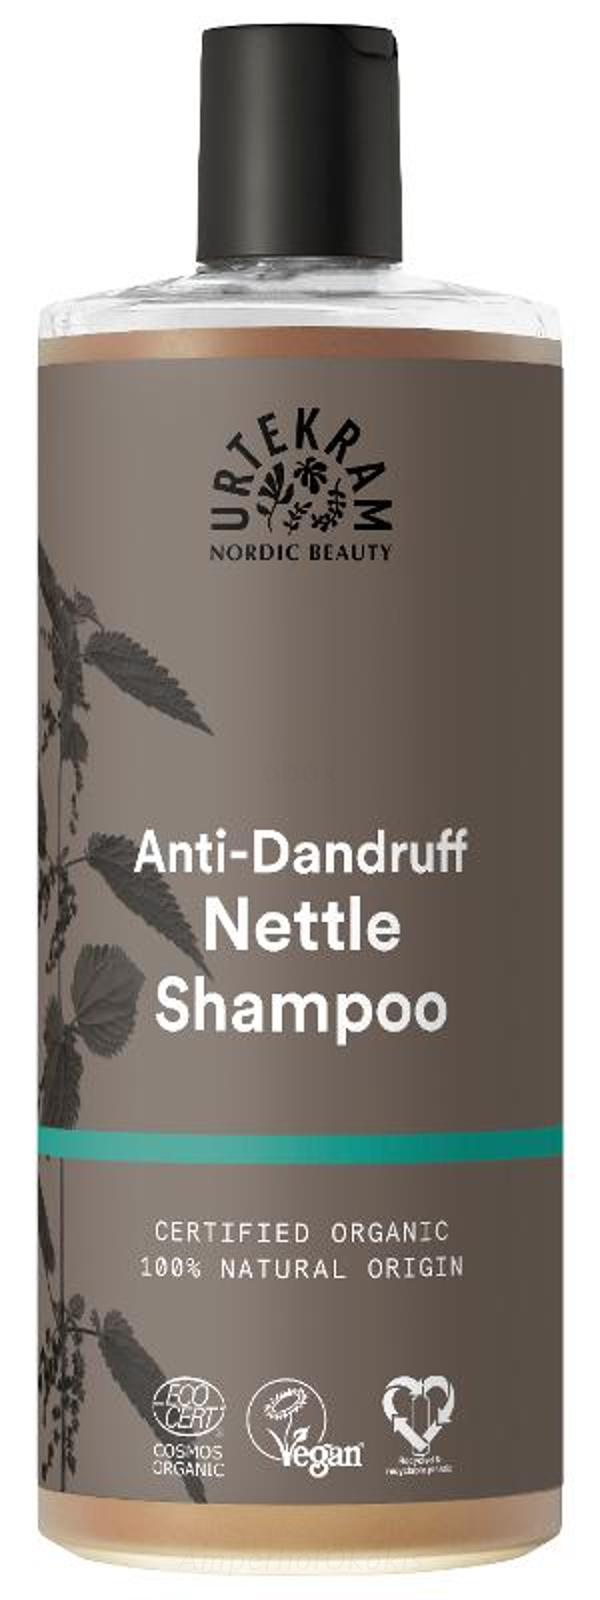 Produktfoto zu Shampoo Nettle 500 ml